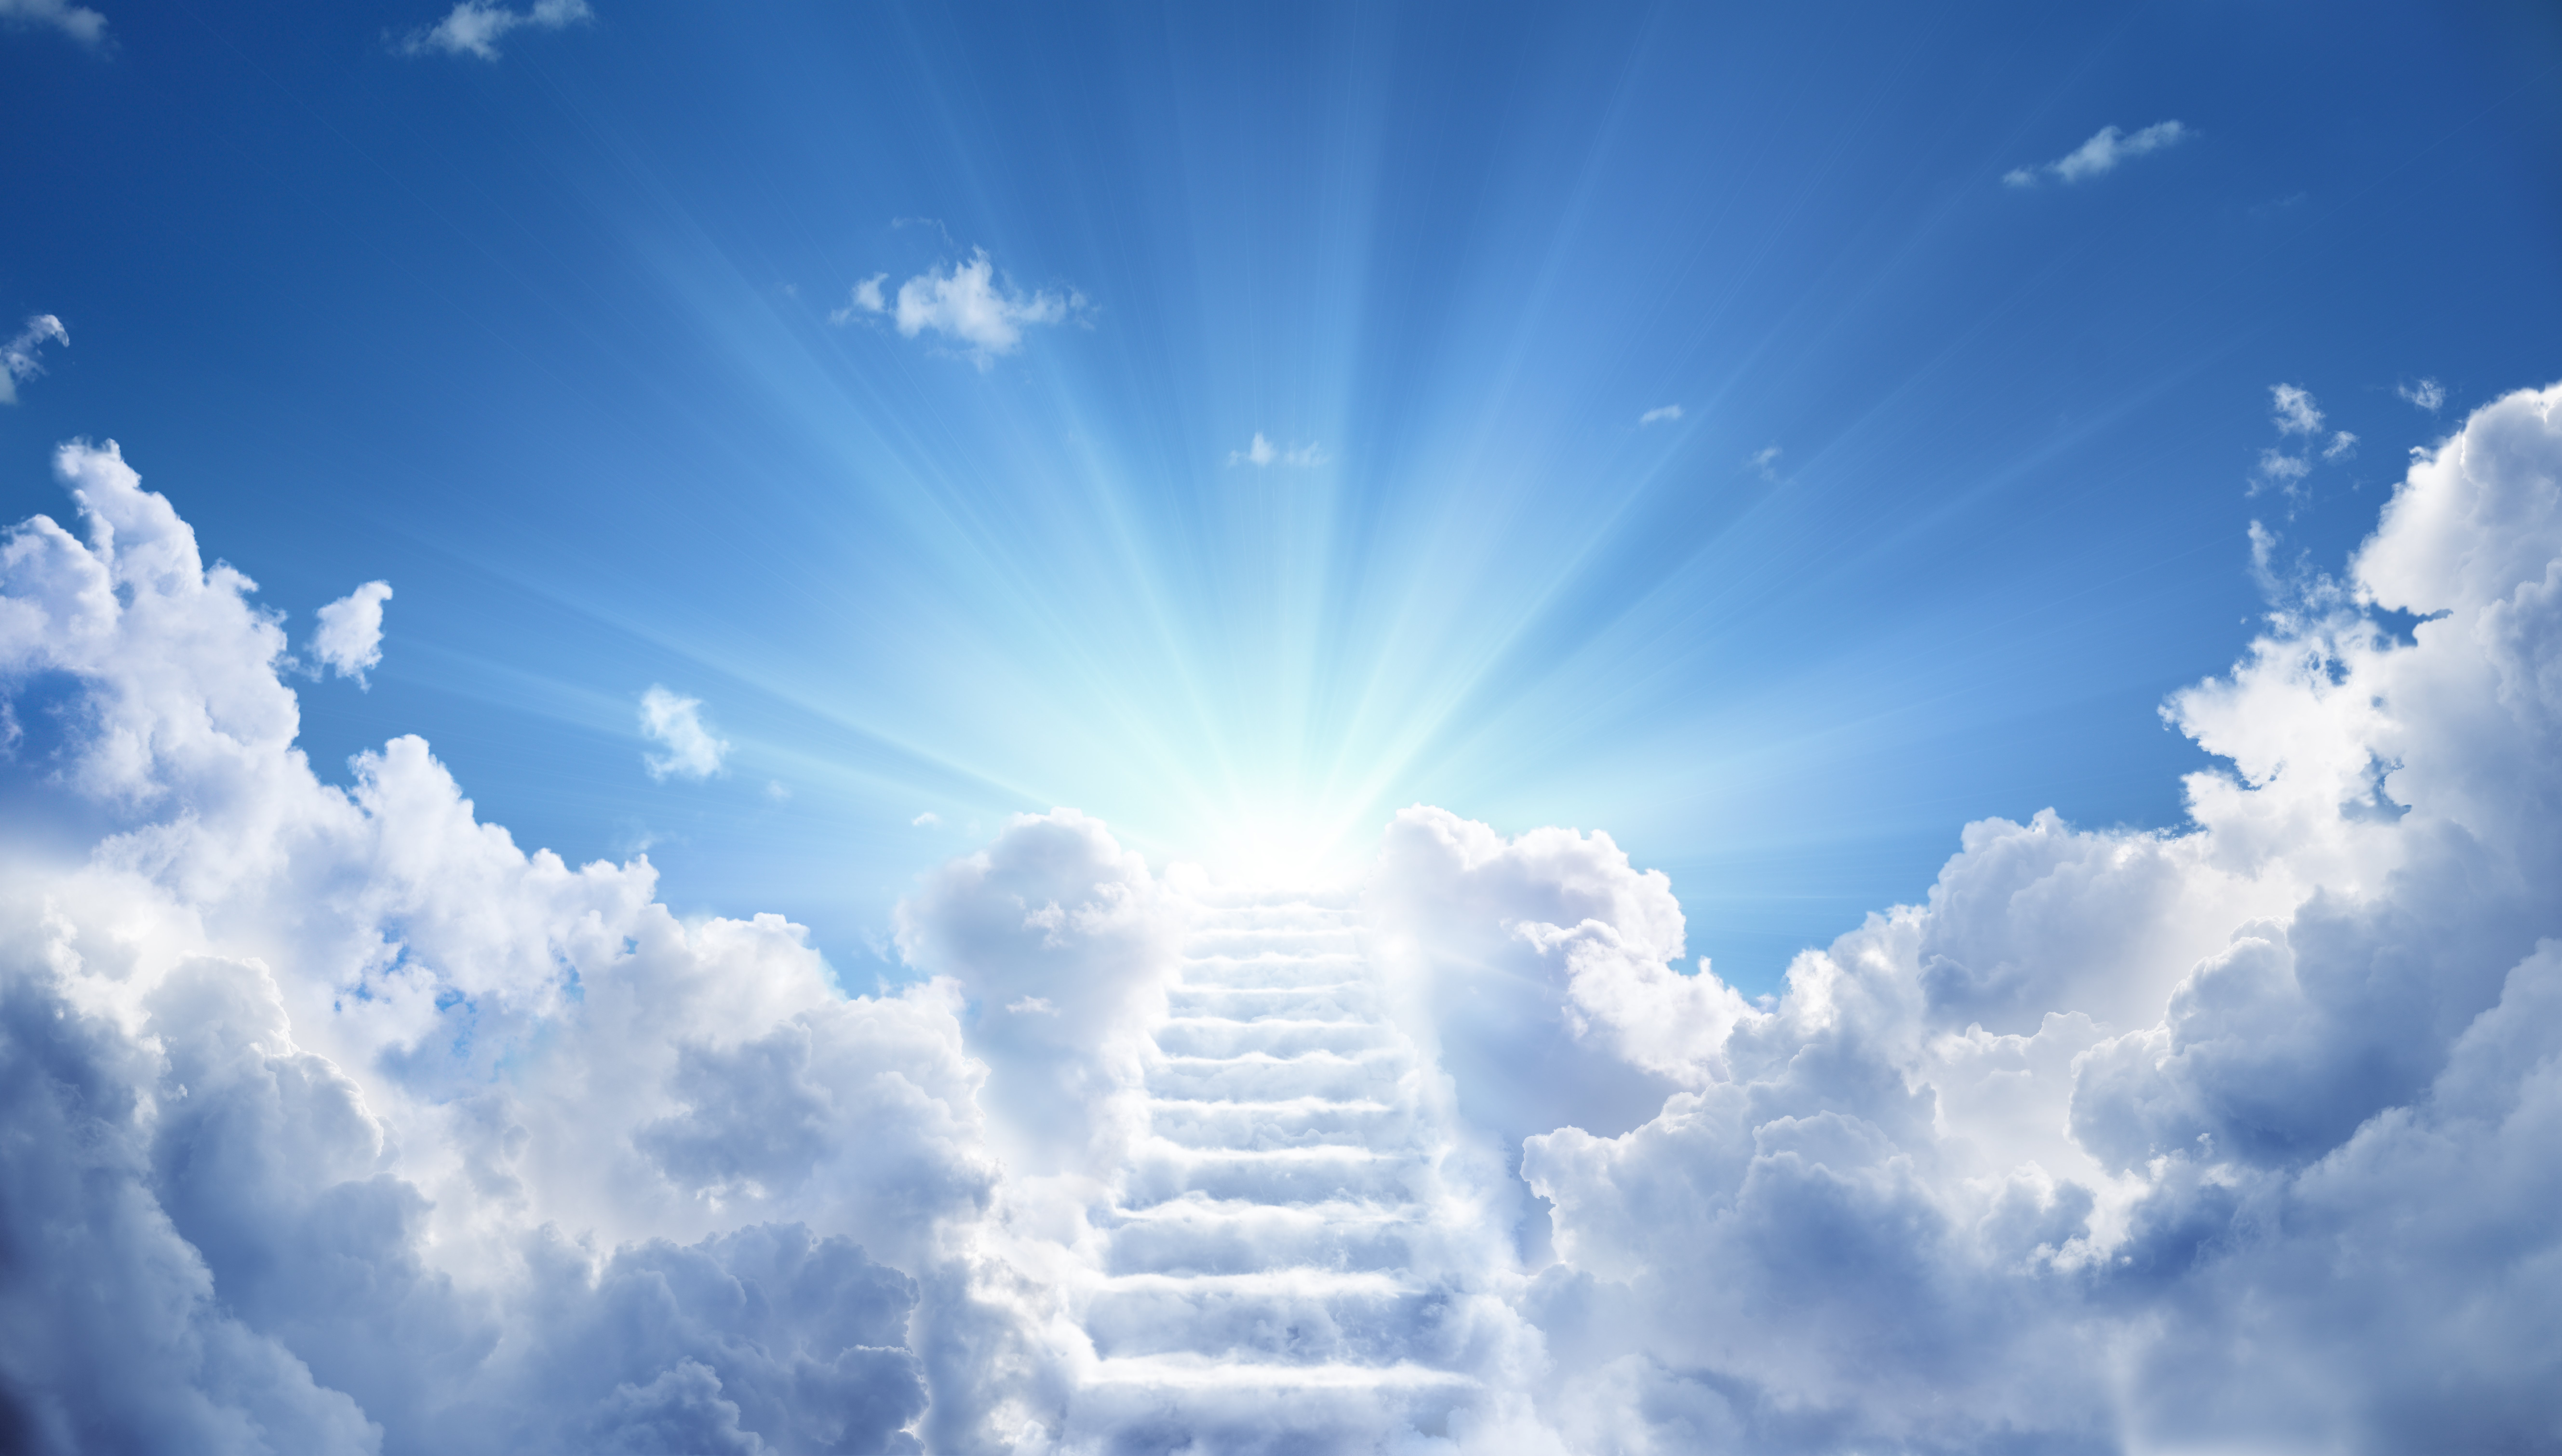 Clouds making a stairway in heaven | Source: Shutterstock